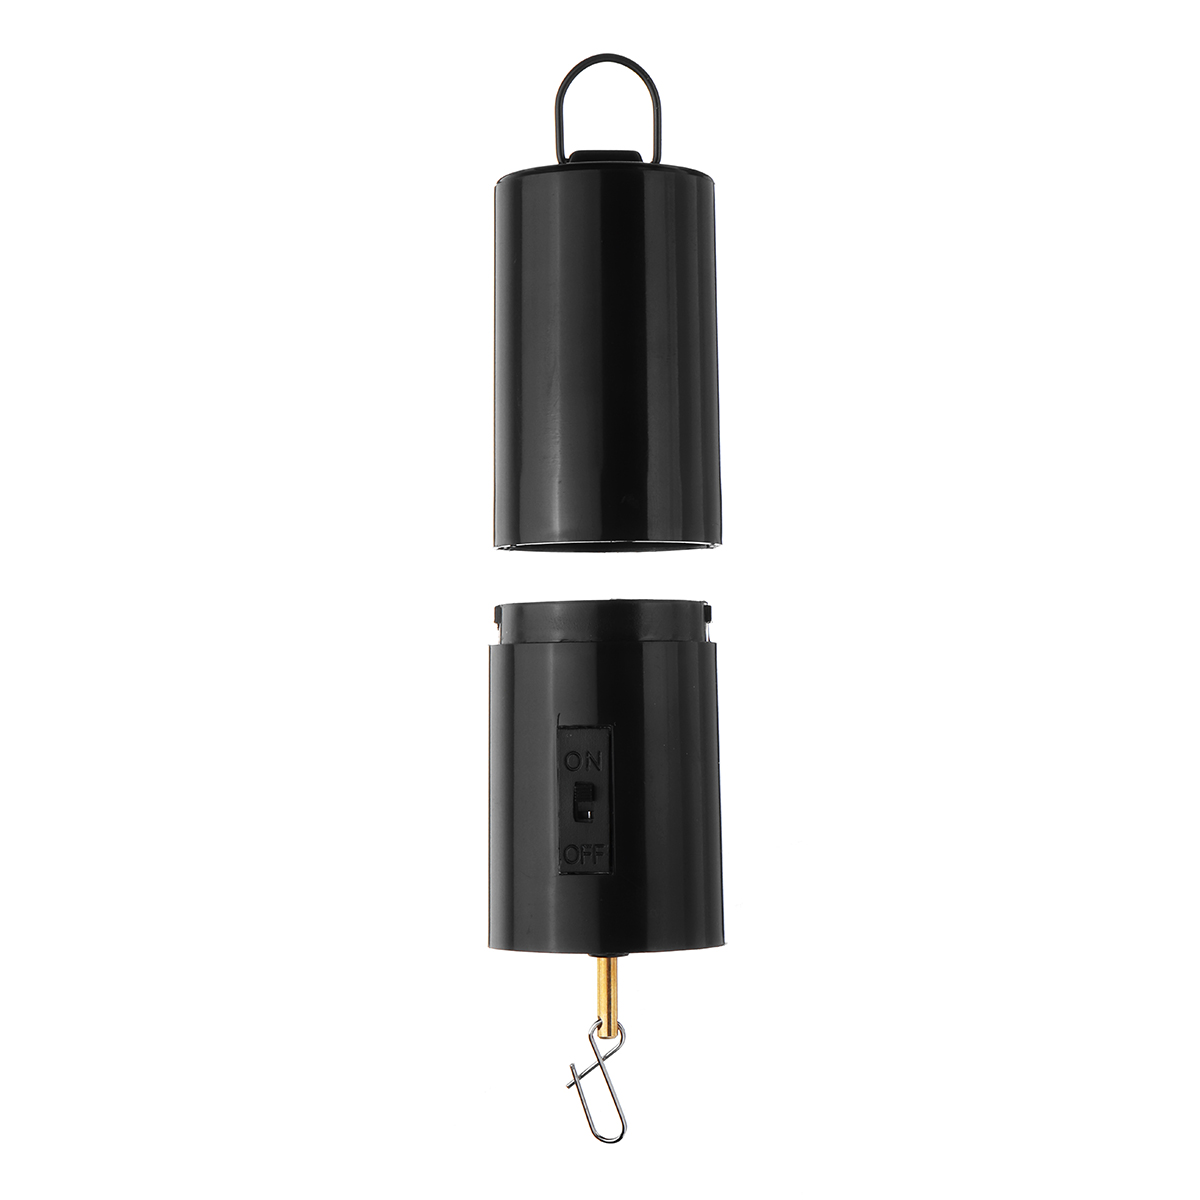 Hanging-Battery-Operated-Revolving-Motor-Wind-Spinner-Rotating-Ornament-Garden-Decor-Display-1388303